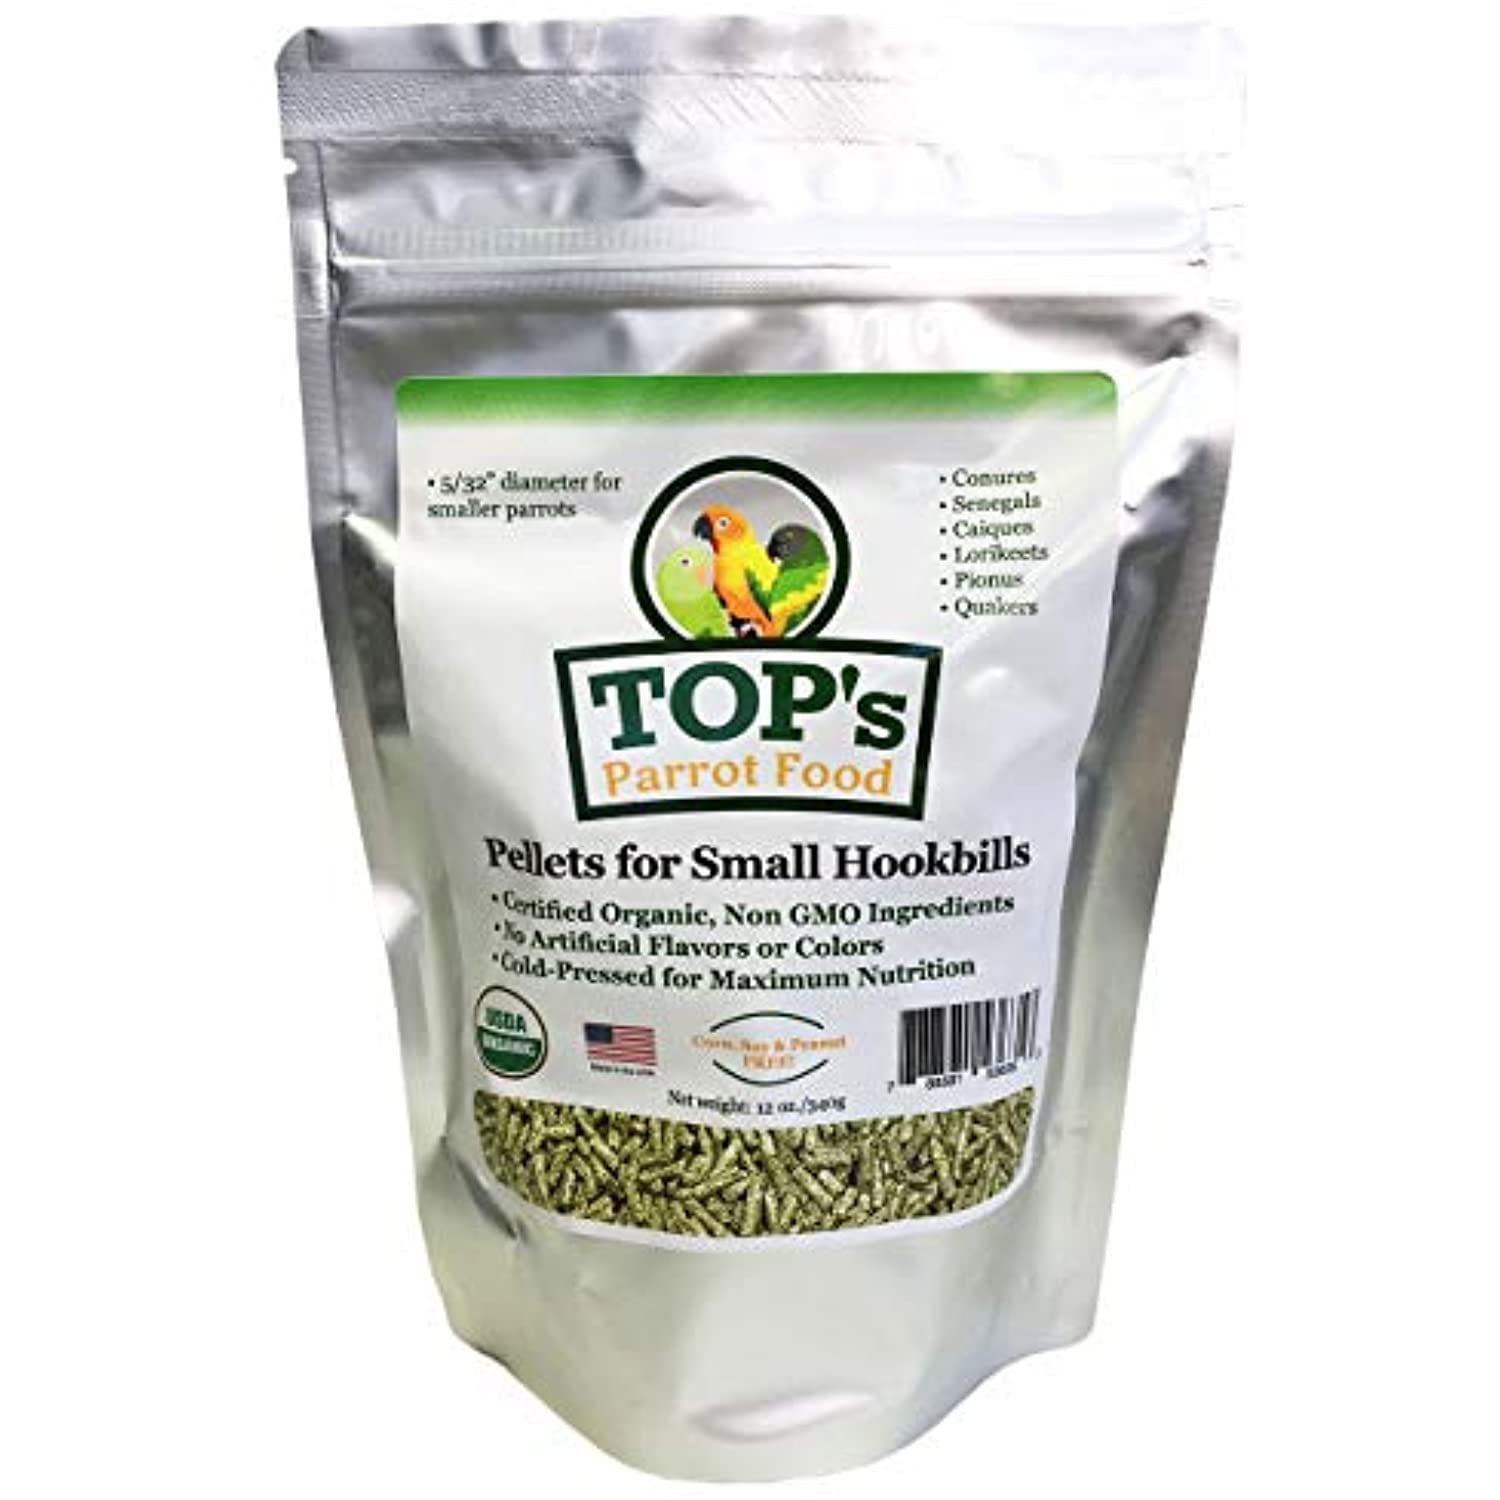 USDA Organic TOP's Parrot Food Pellets - 12oz